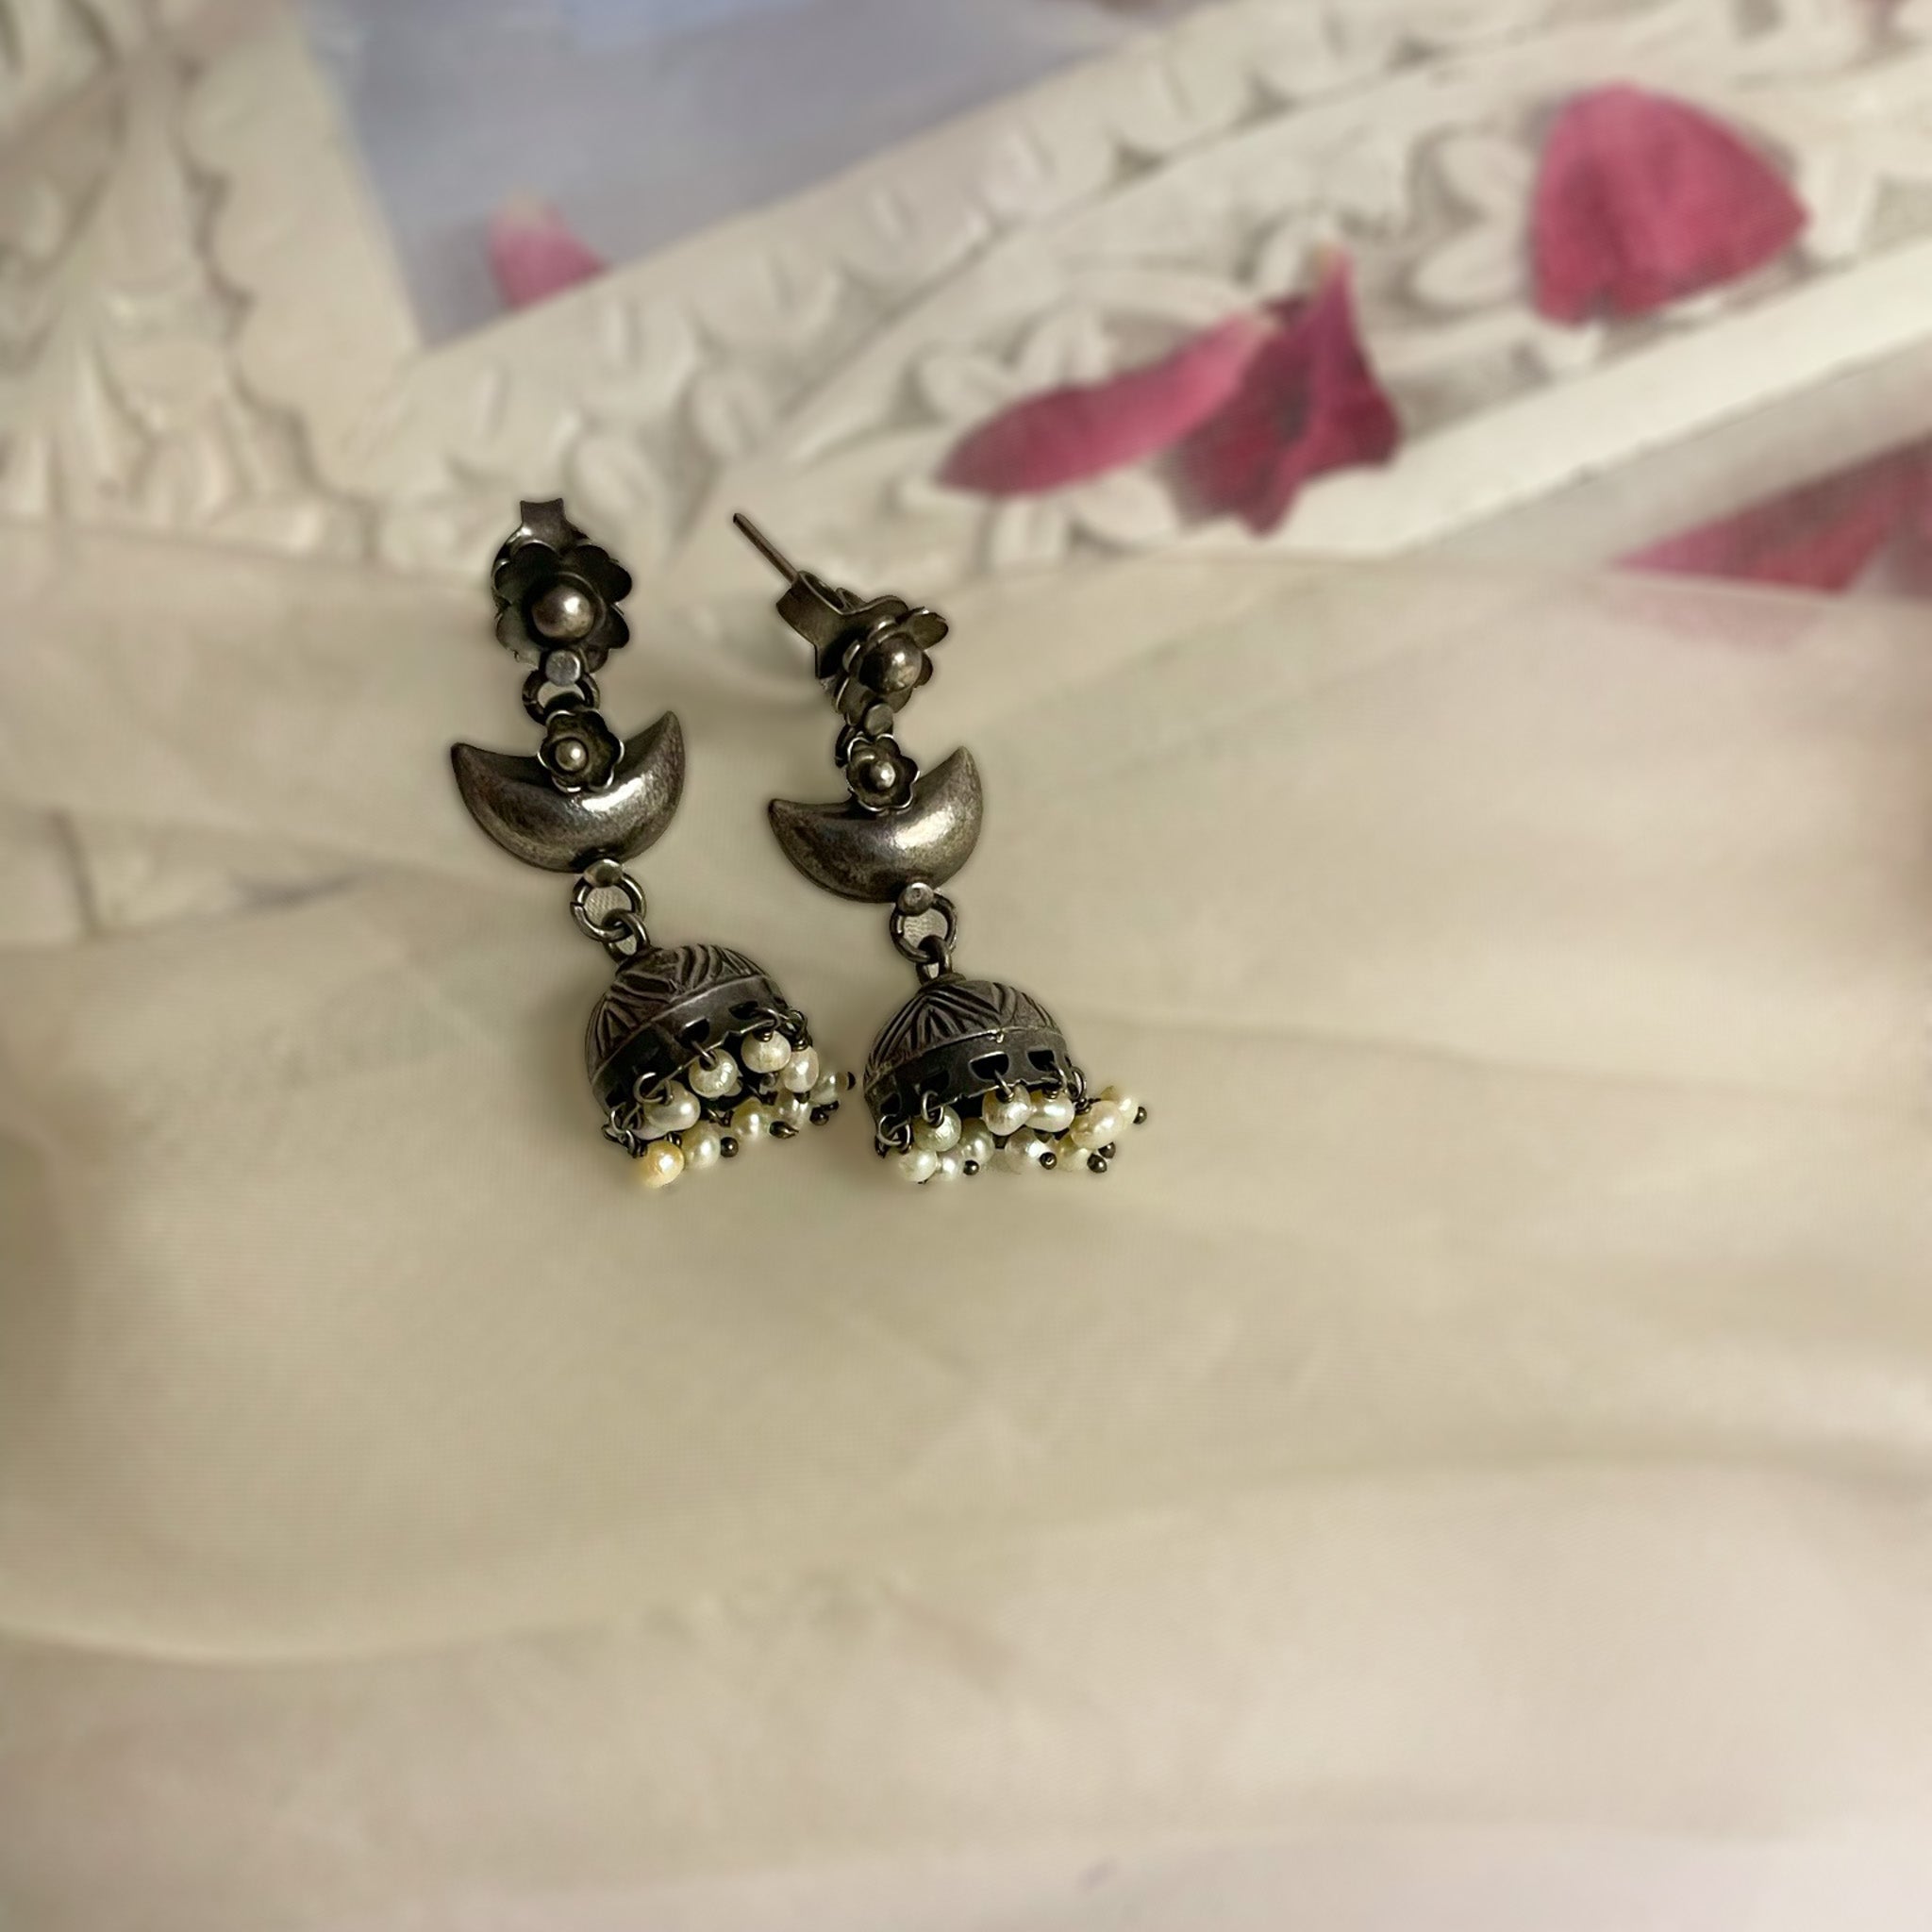 Share more than 69 black colour earrings online latest